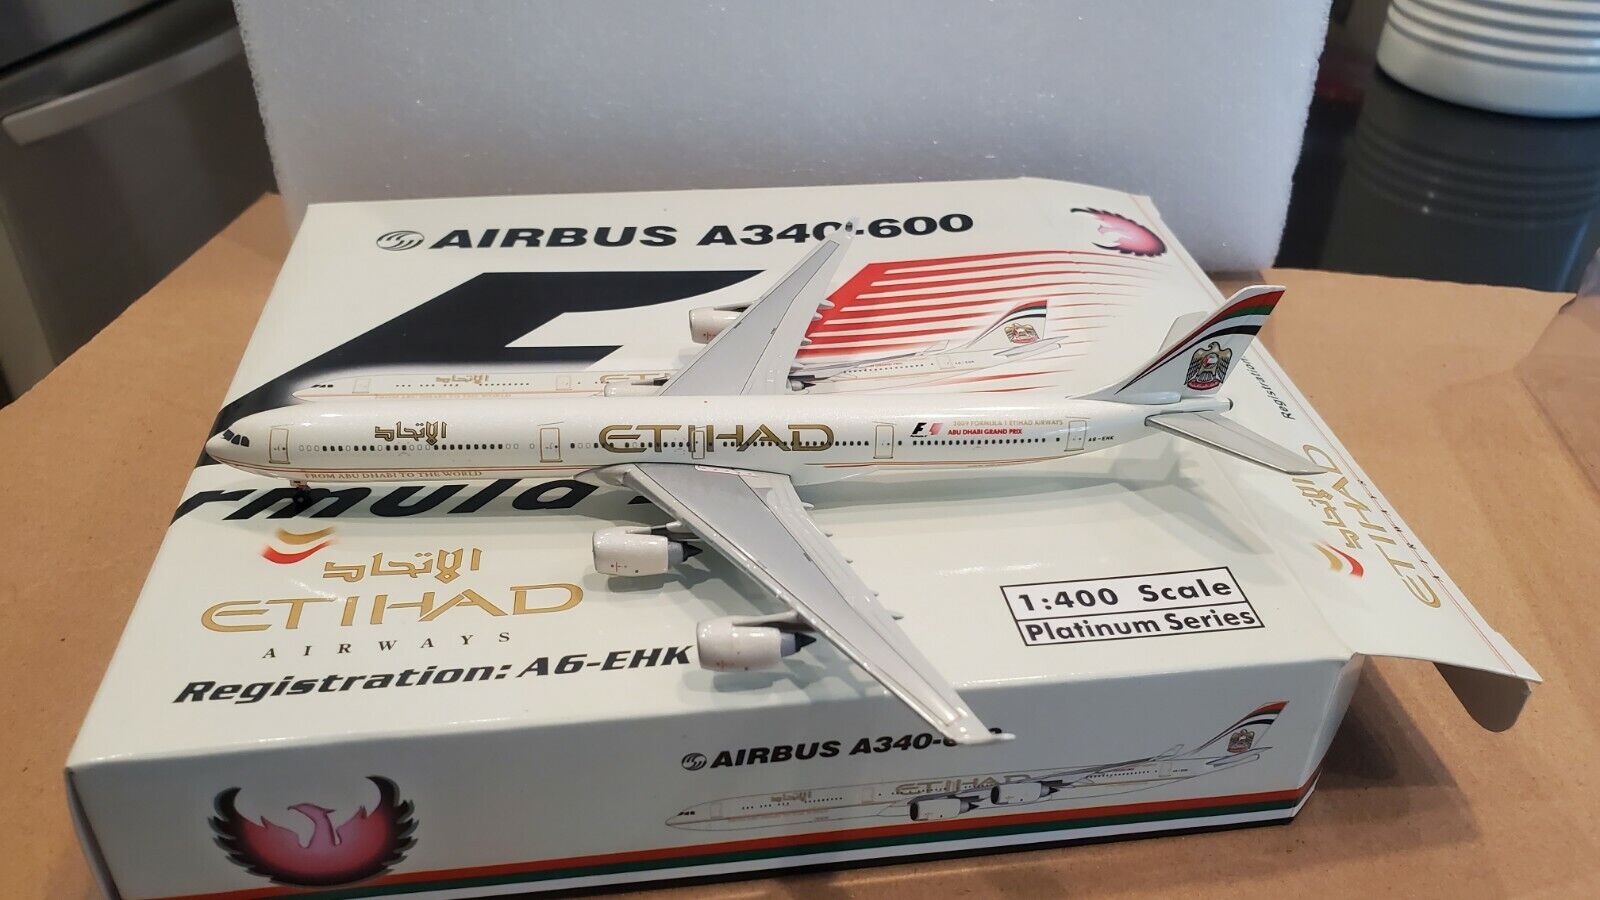 Phoenix Models Etihad Airways A340-642 1:400 Ph4etd470 F1 Grand Prix A6-ehk